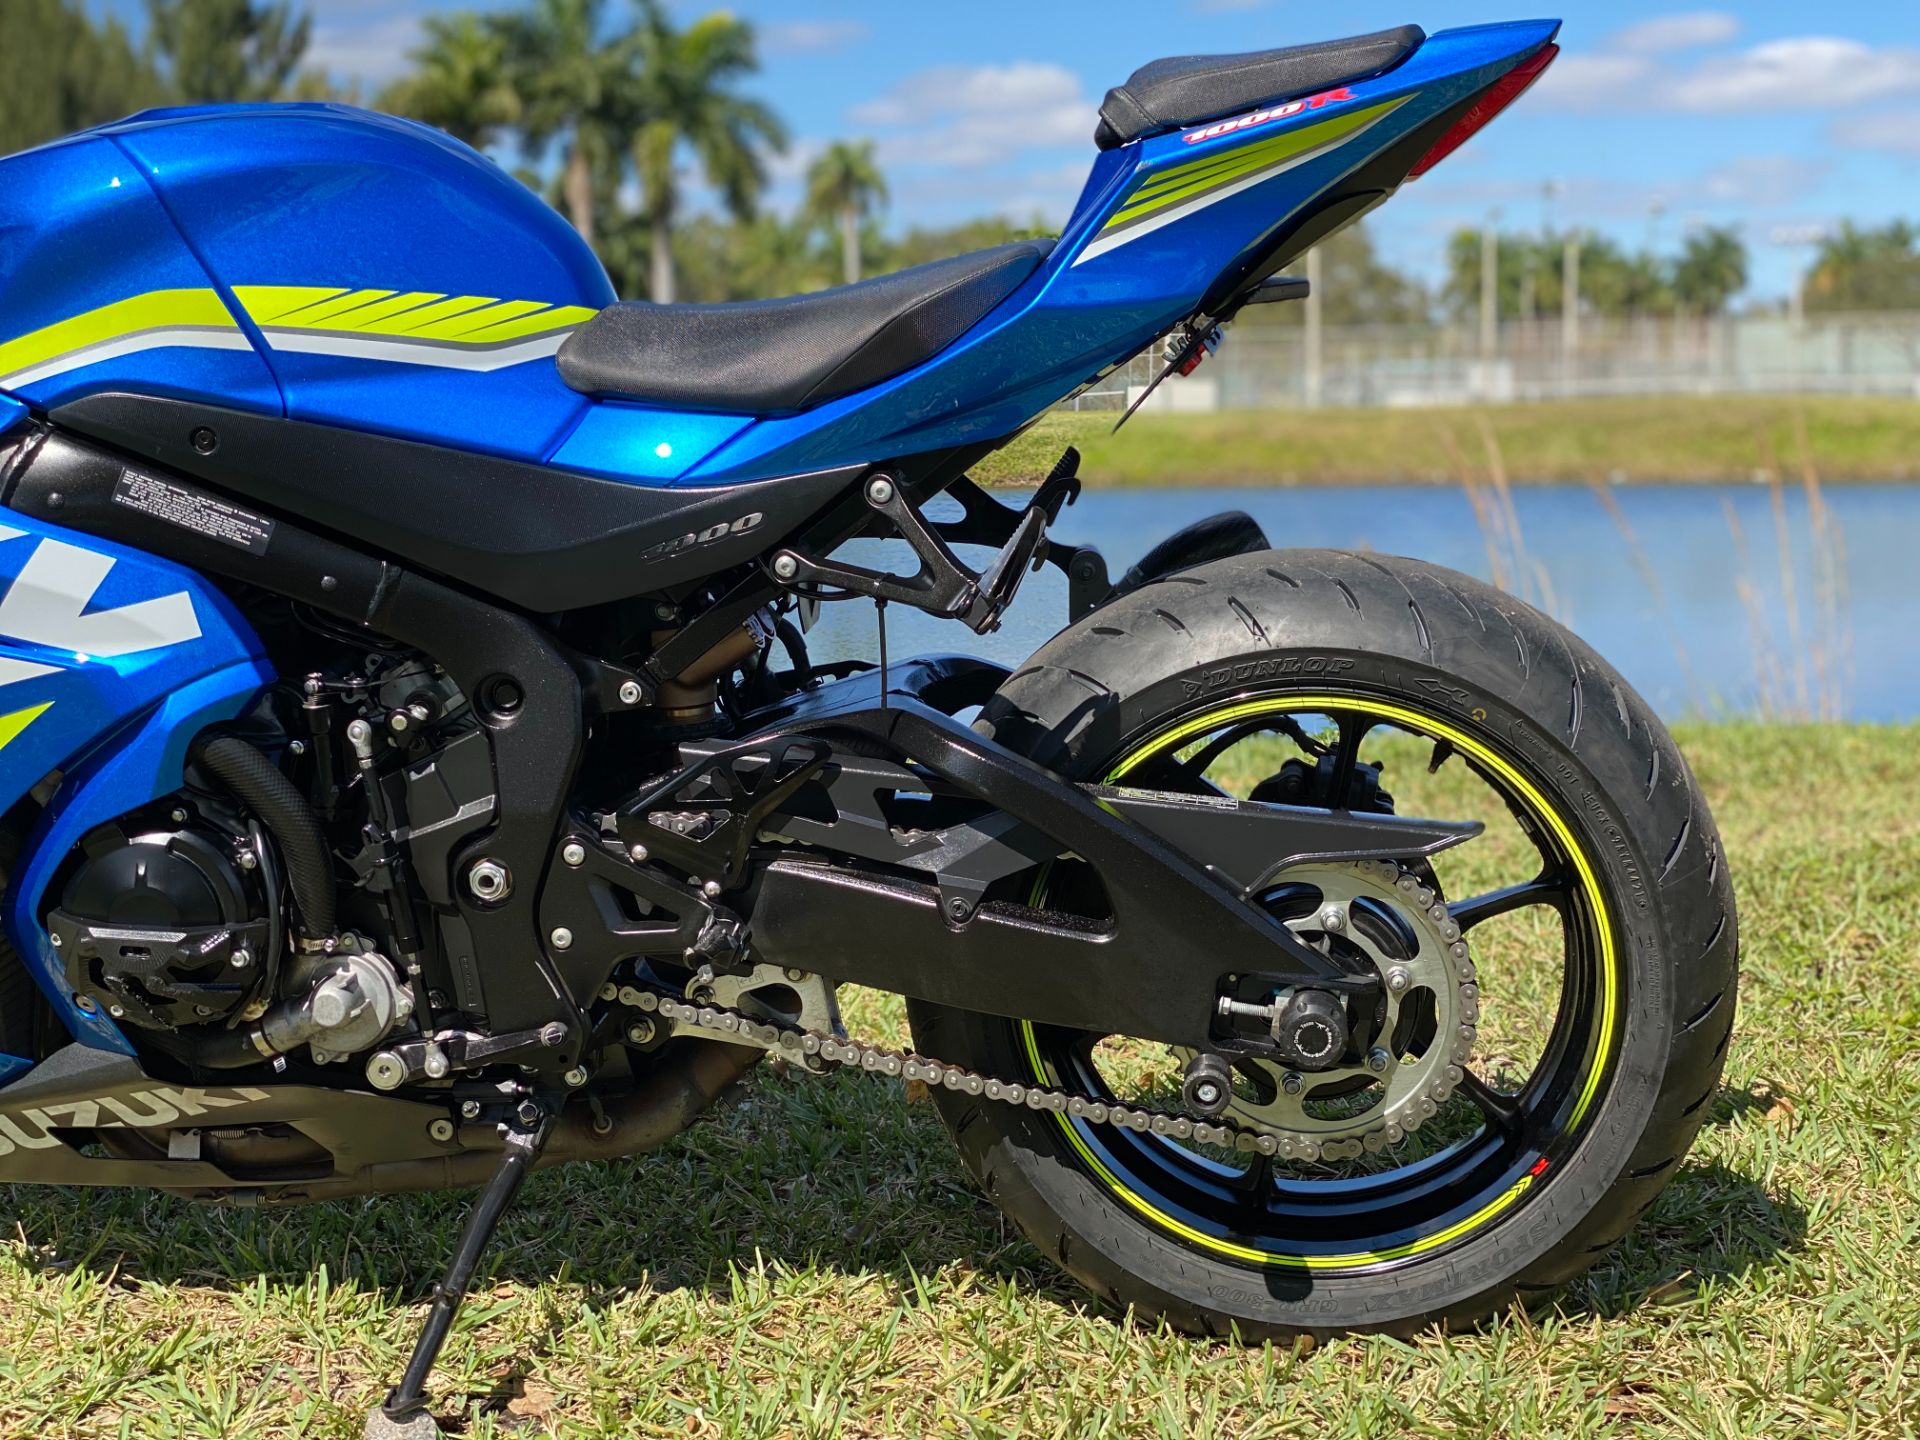 2017 Suzuki GSX-R1000R in North Miami Beach, Florida - Photo 21